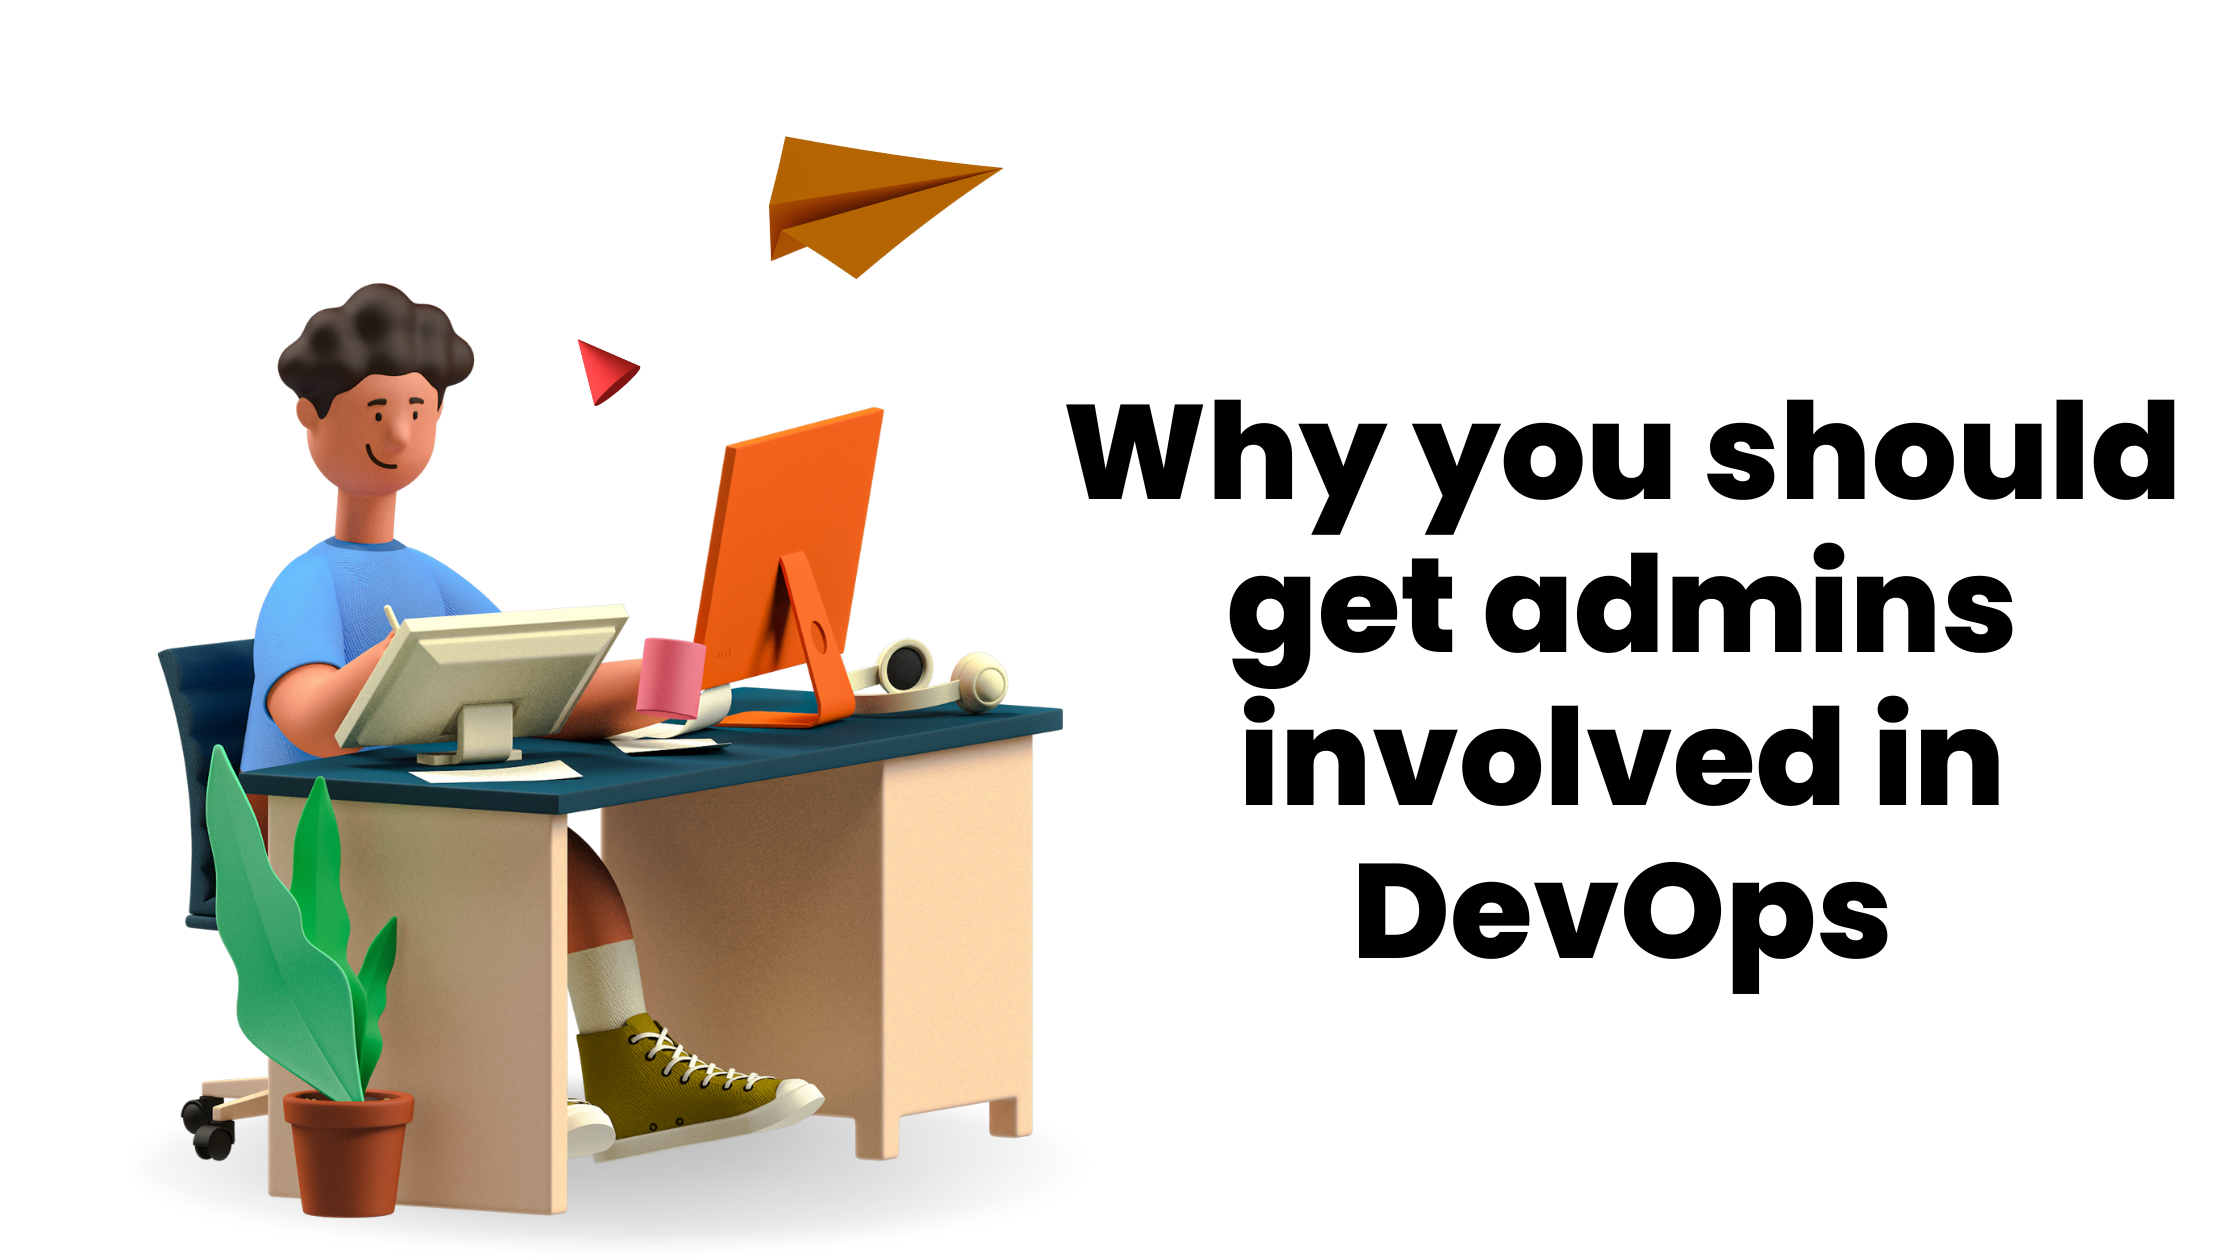 Why you should get admins involved in DevOps